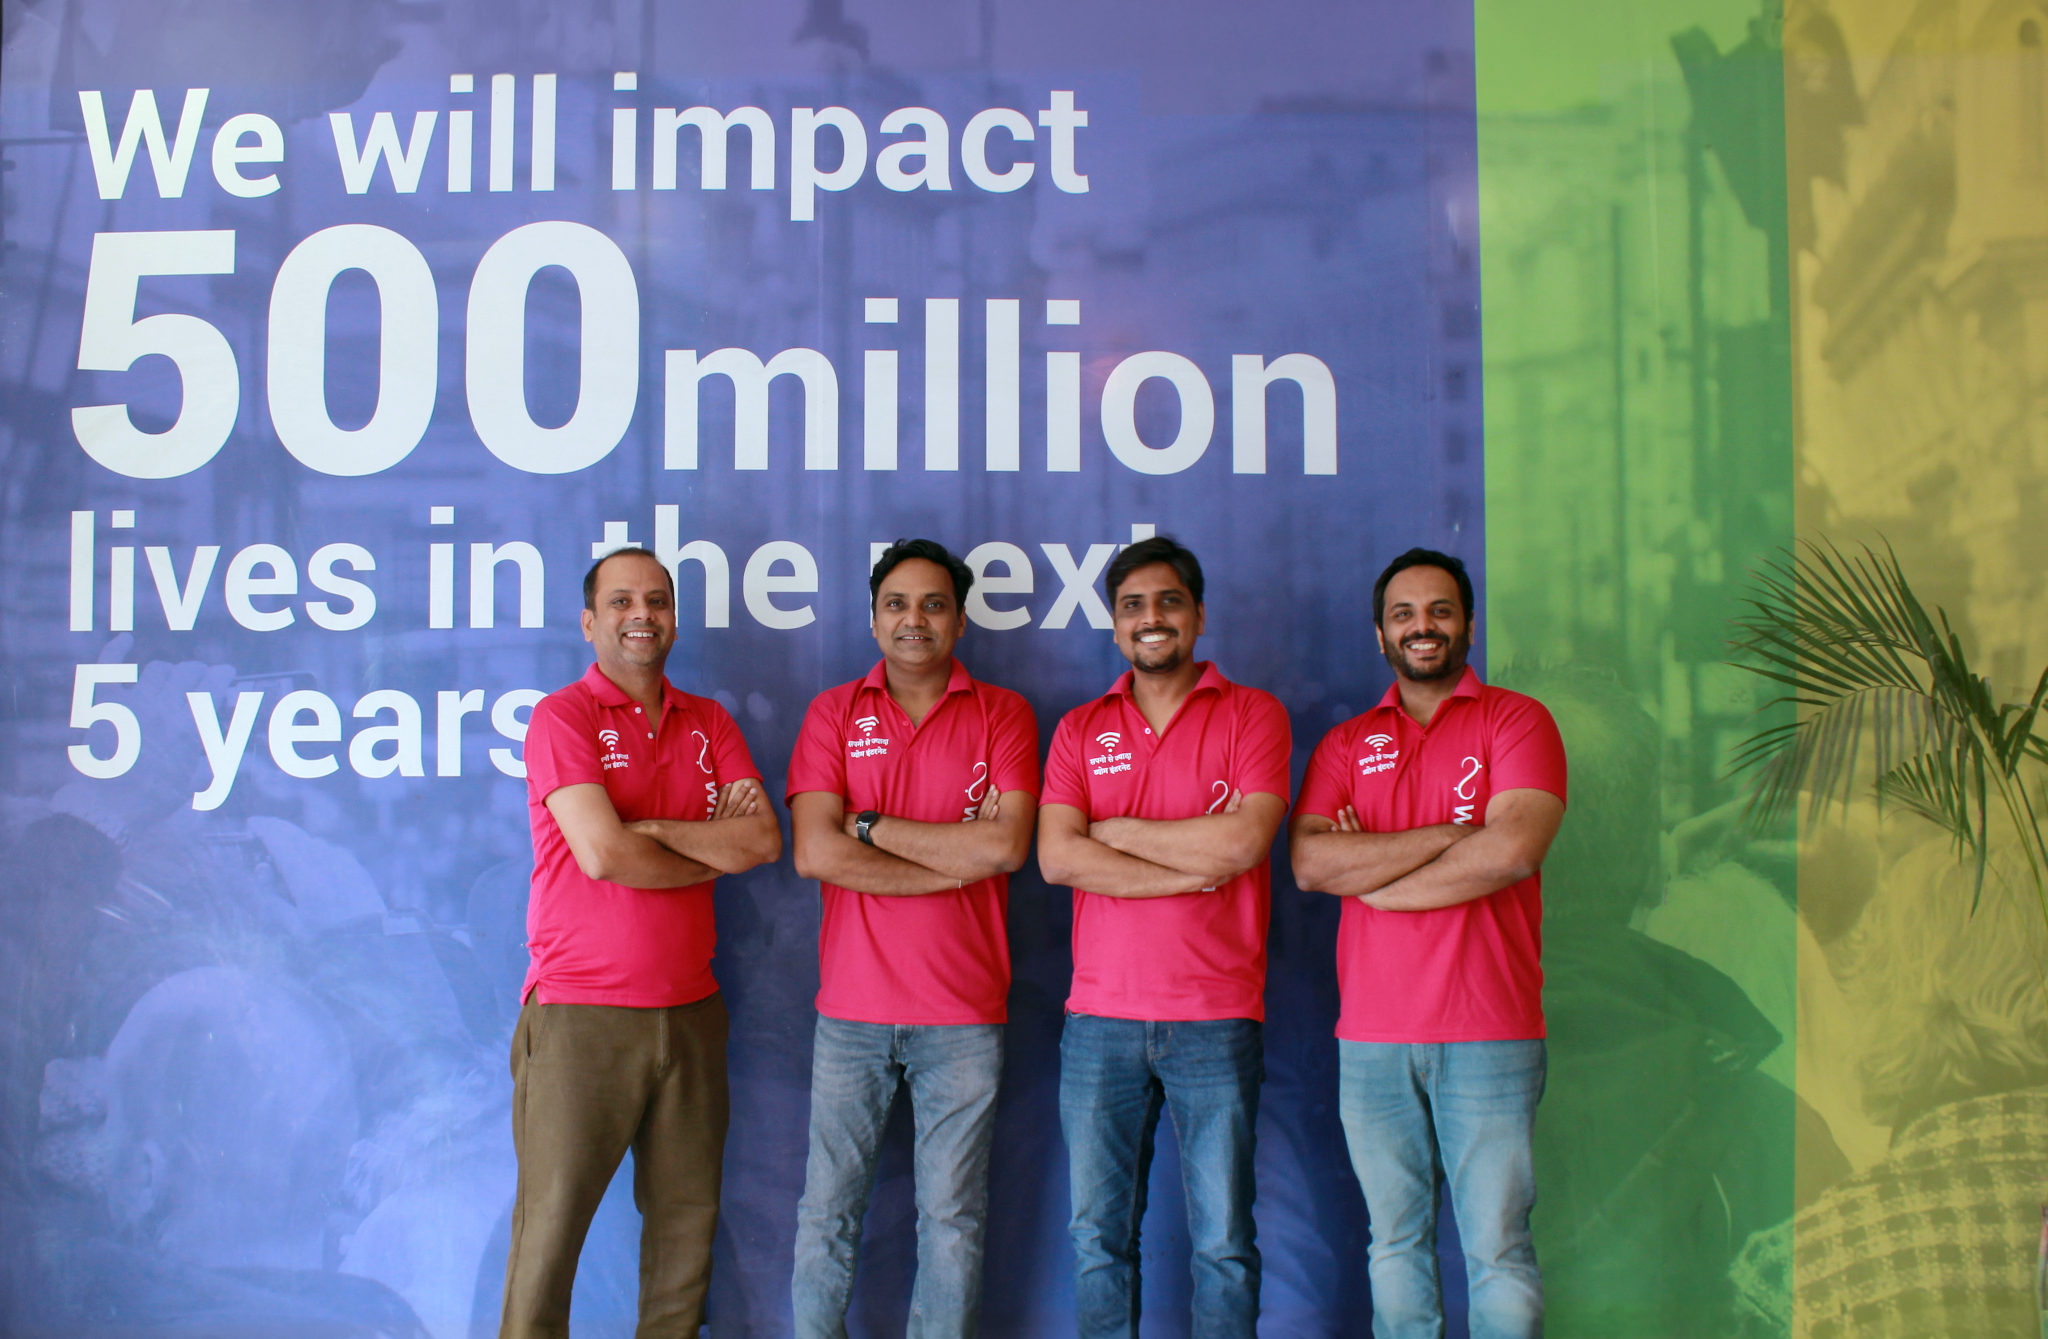 From left to right: Satyam Darmora, Founder, Wiom, Nishit Aggarwal, Co-founder, Wiom, Ashutosh Mishra, Co-founder, Wiom, Maanas Dwivedi, Co-founder, Wiom